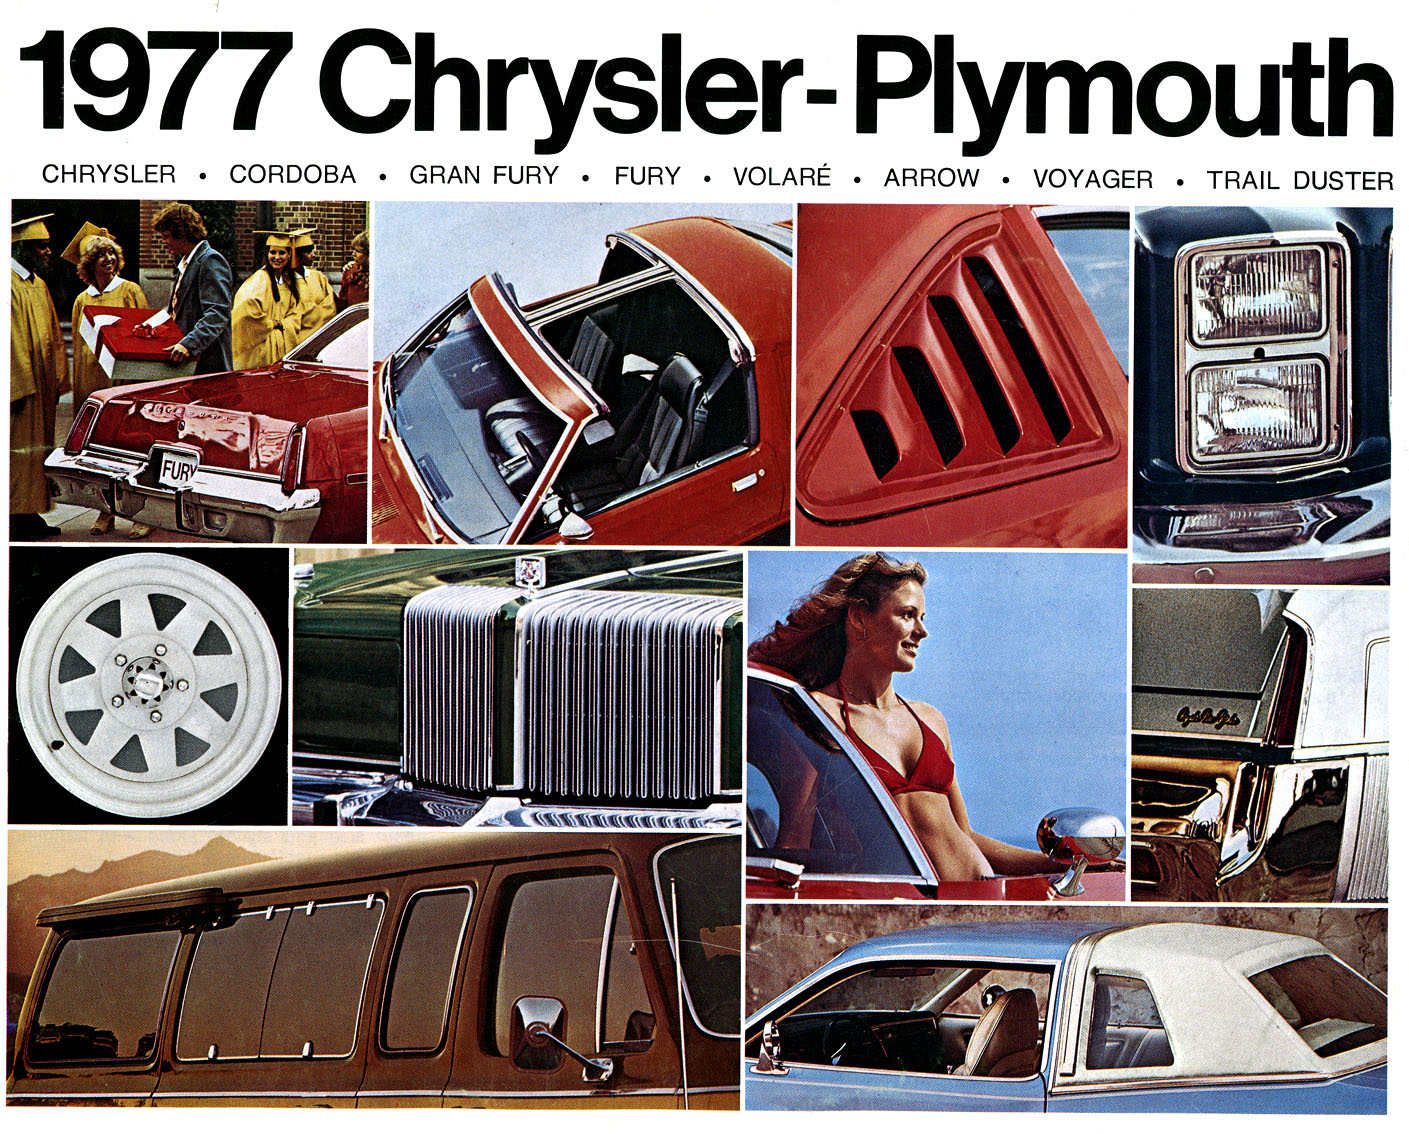 1977 Chrysler Plymouth Brochure